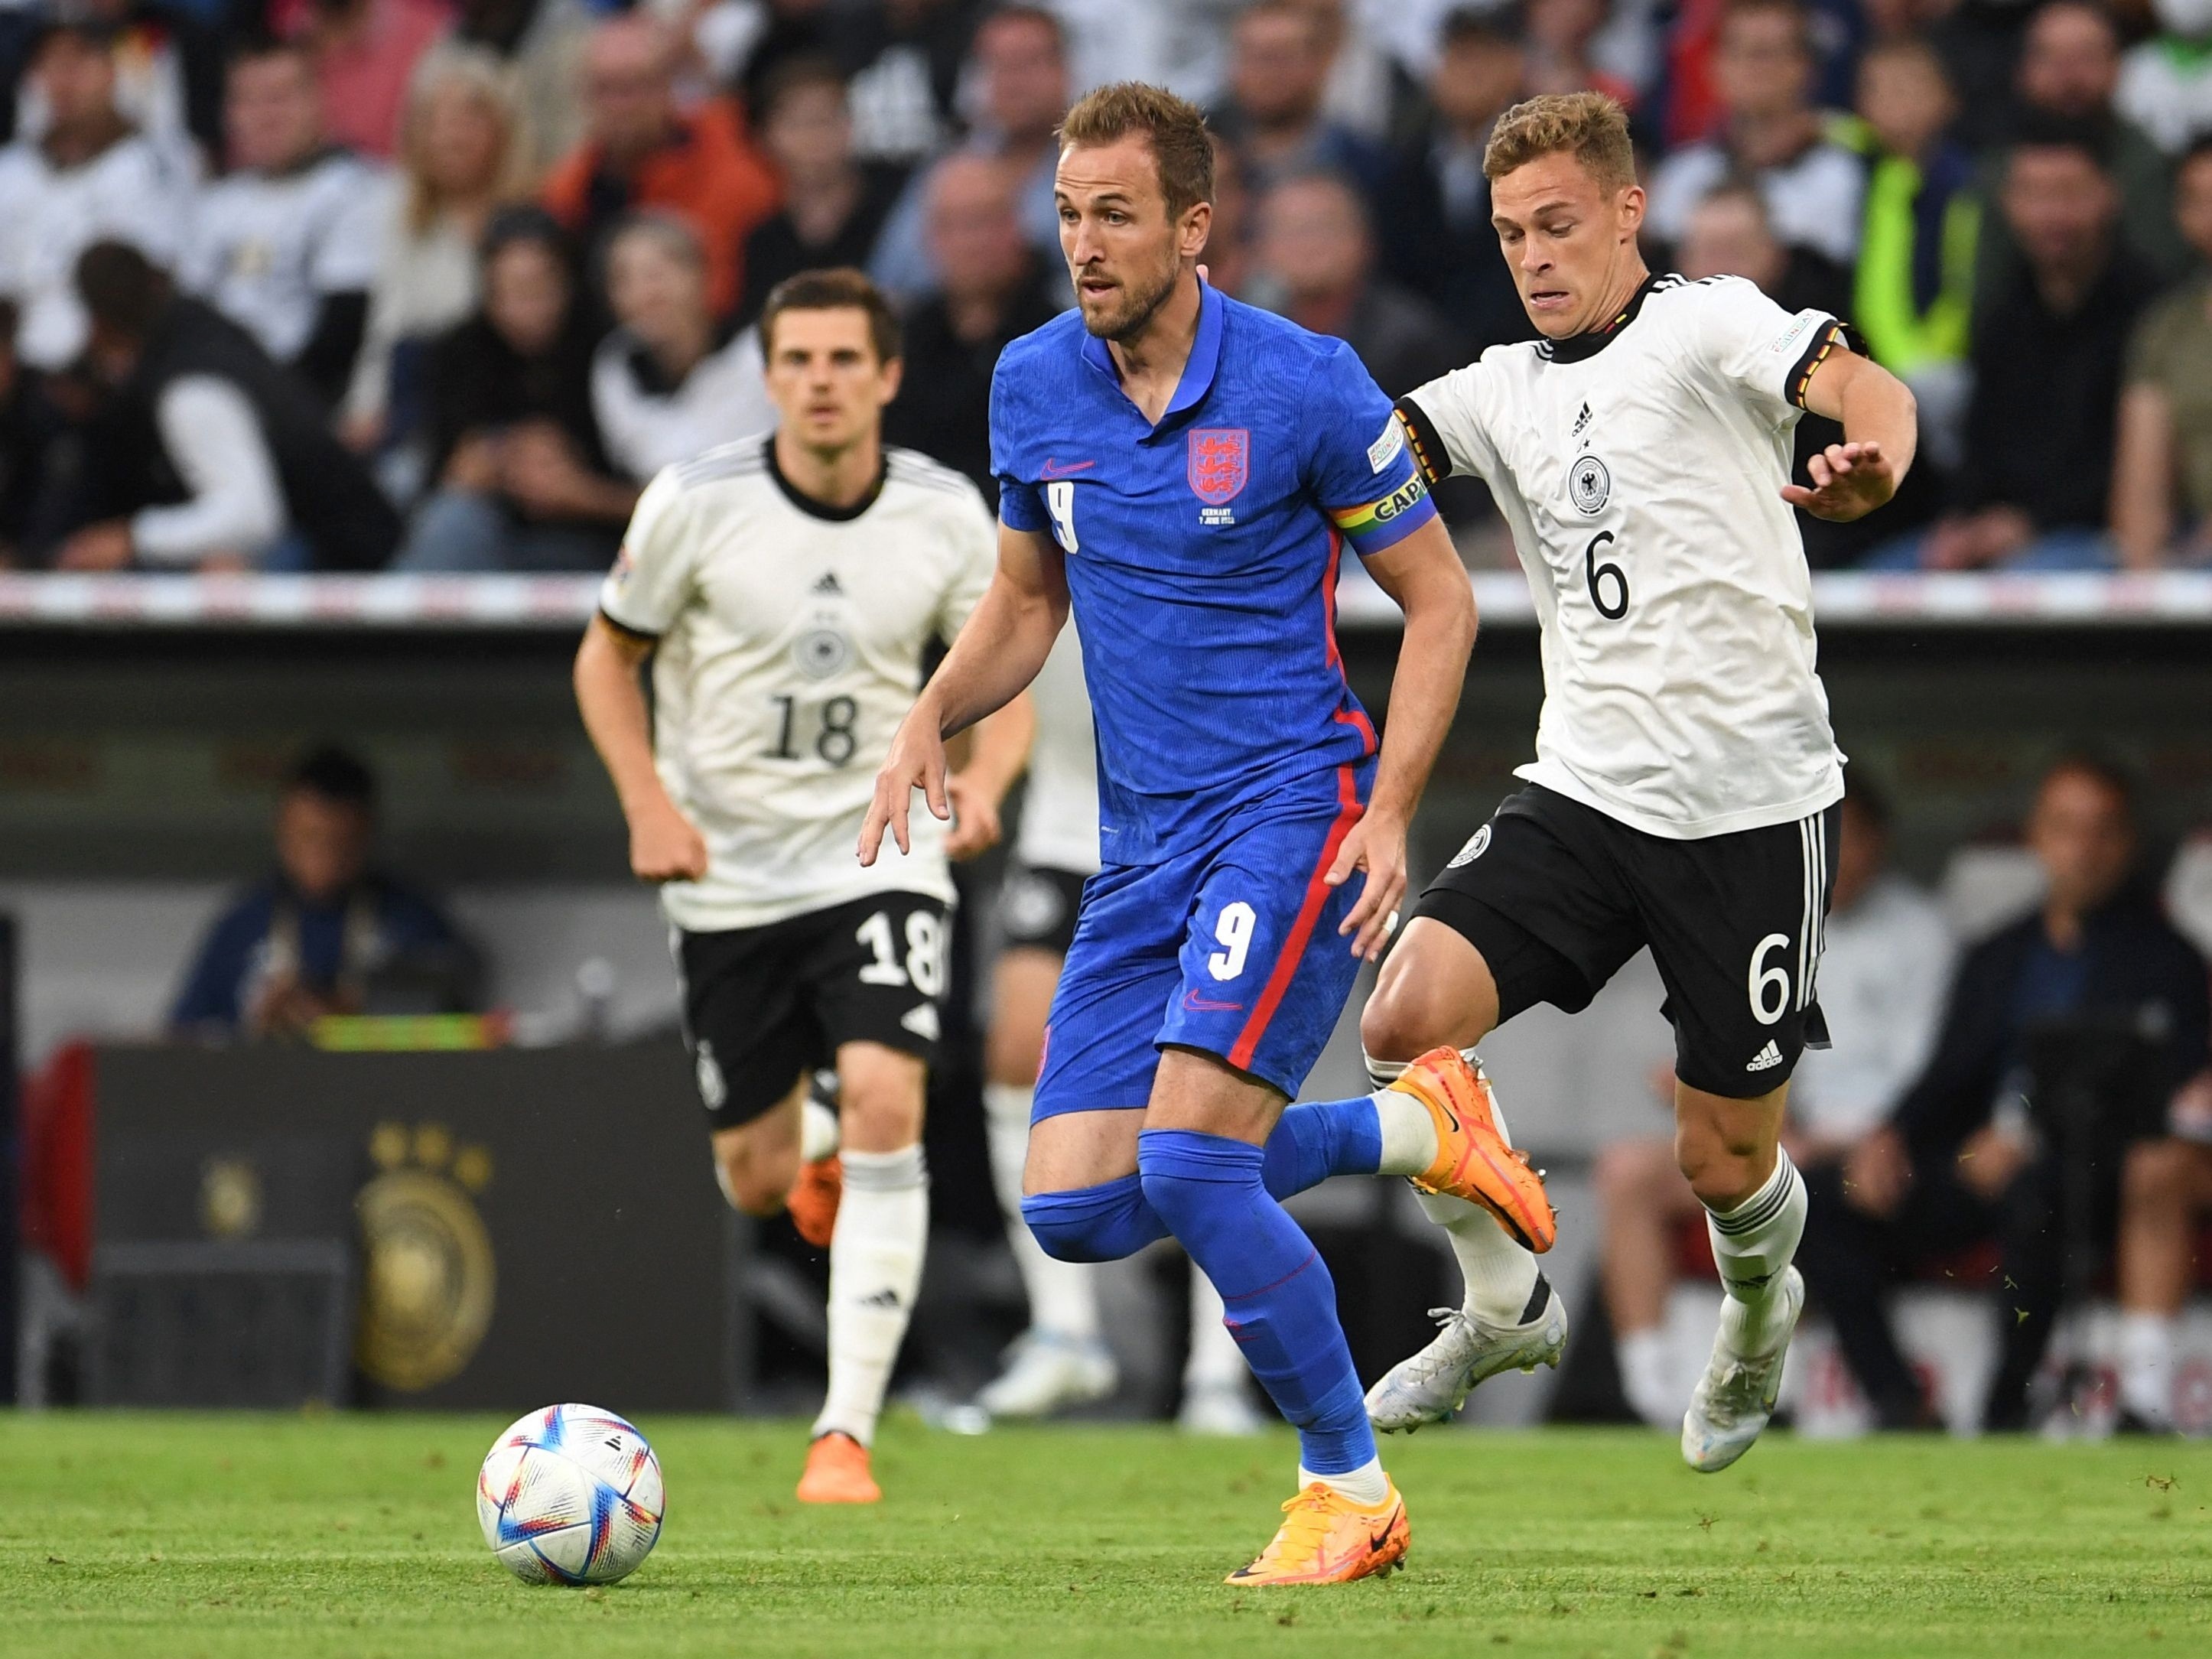 Holanda x Inglaterra - SoccerBlog